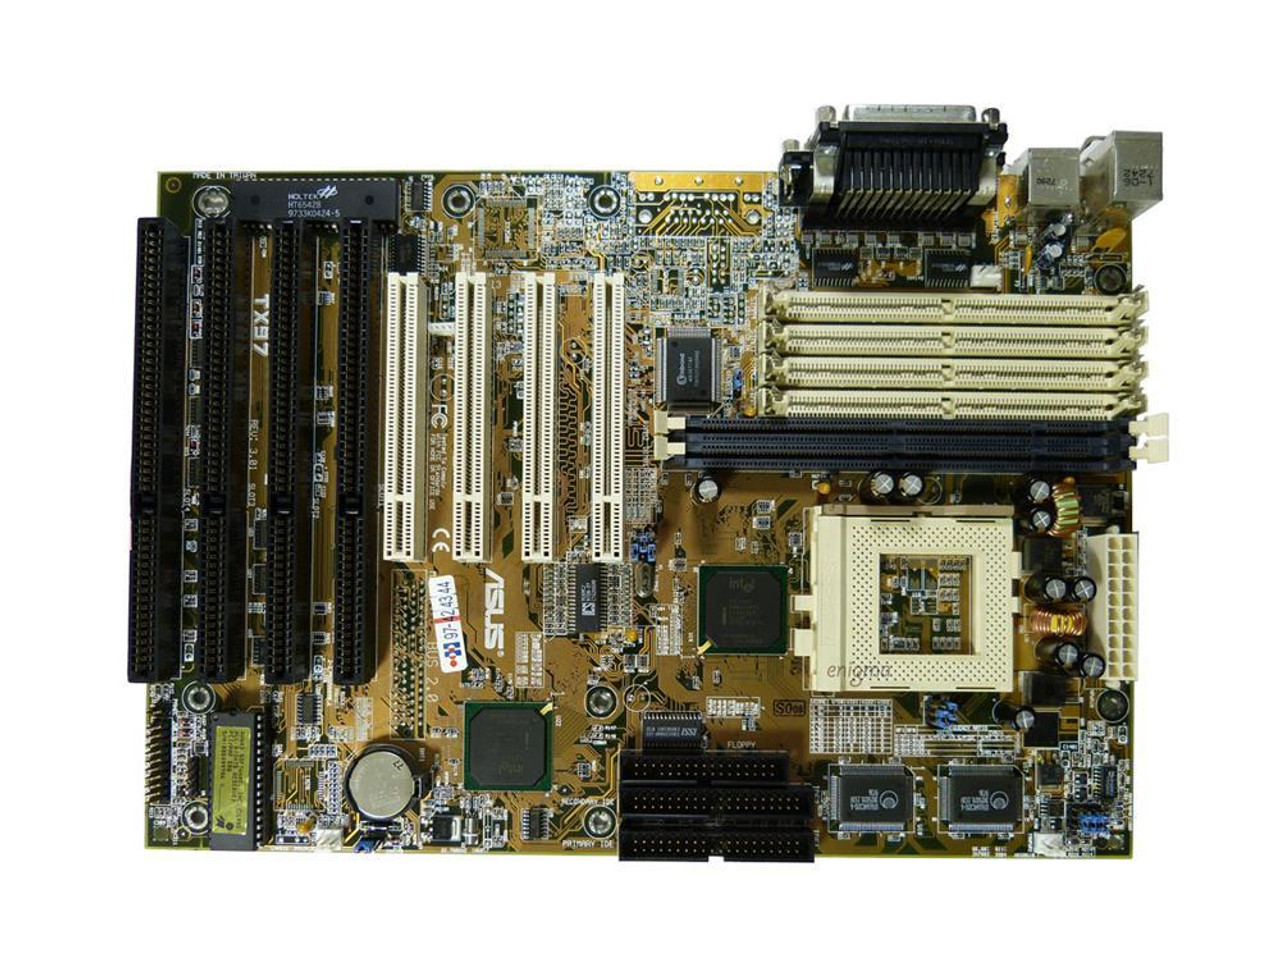 TX97-L ASUS Intel 430TX Chipset . 4 PCI 3 ISA slots 3 SDRAM DIMM sockets A (Refurbished)